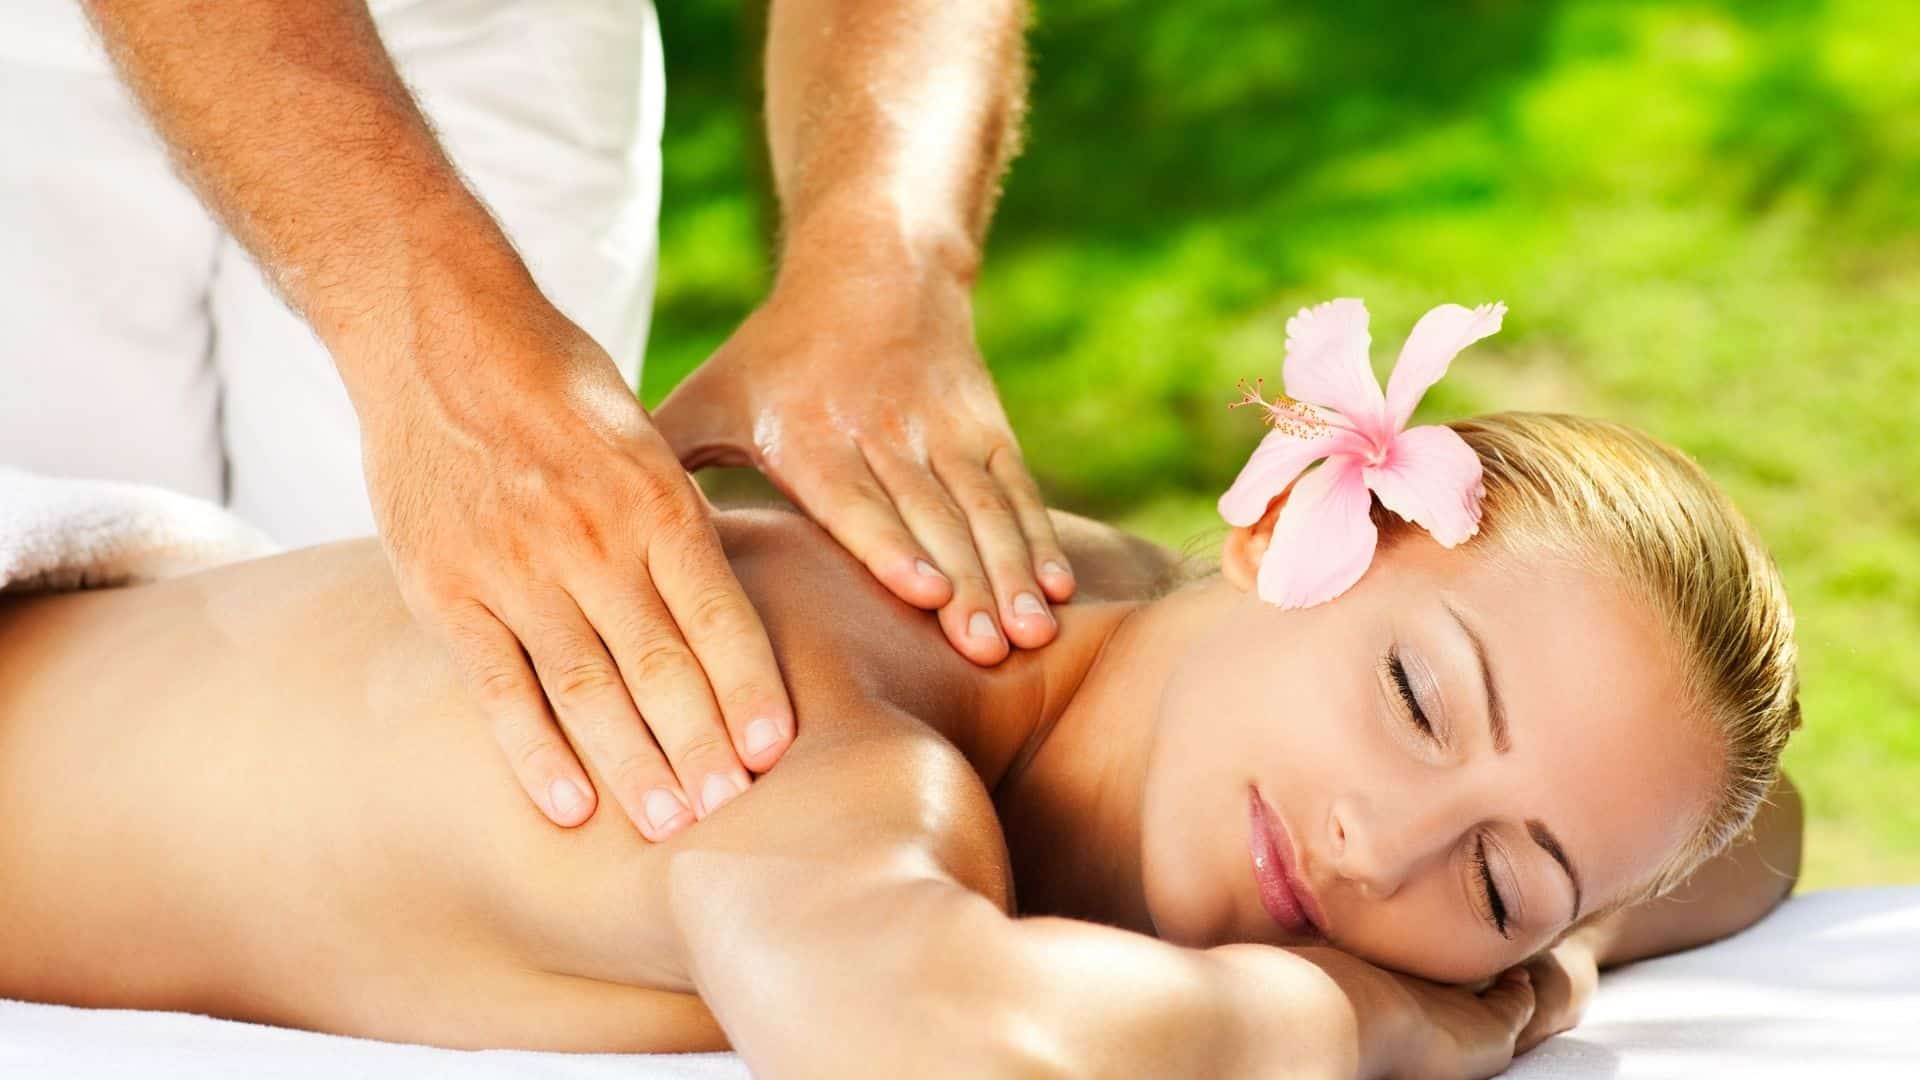 women with pink flower enjoying back massage